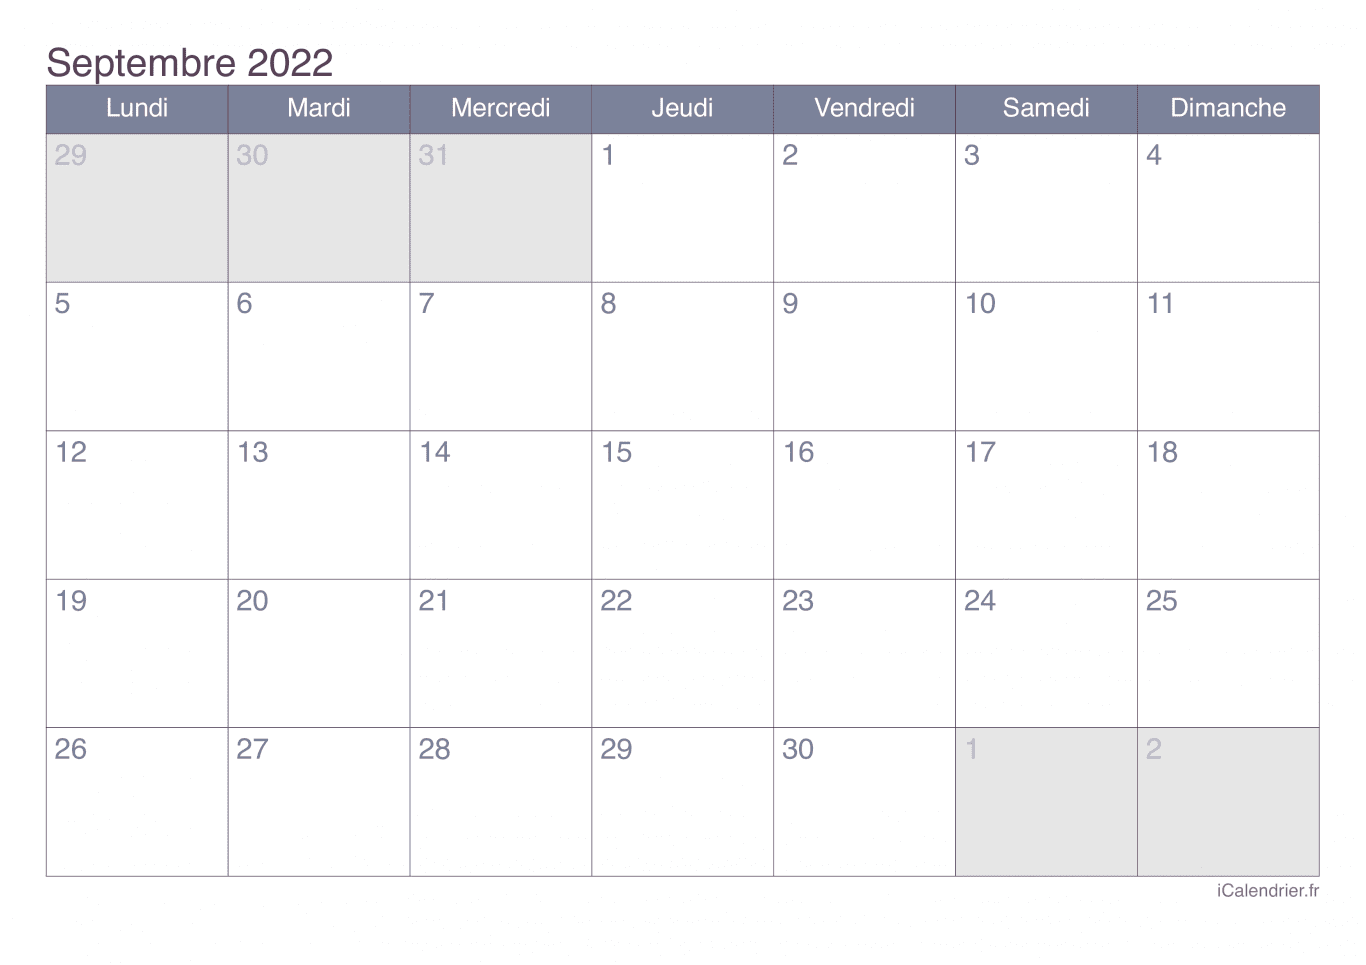 Calendrier de septembre 2022 - Office